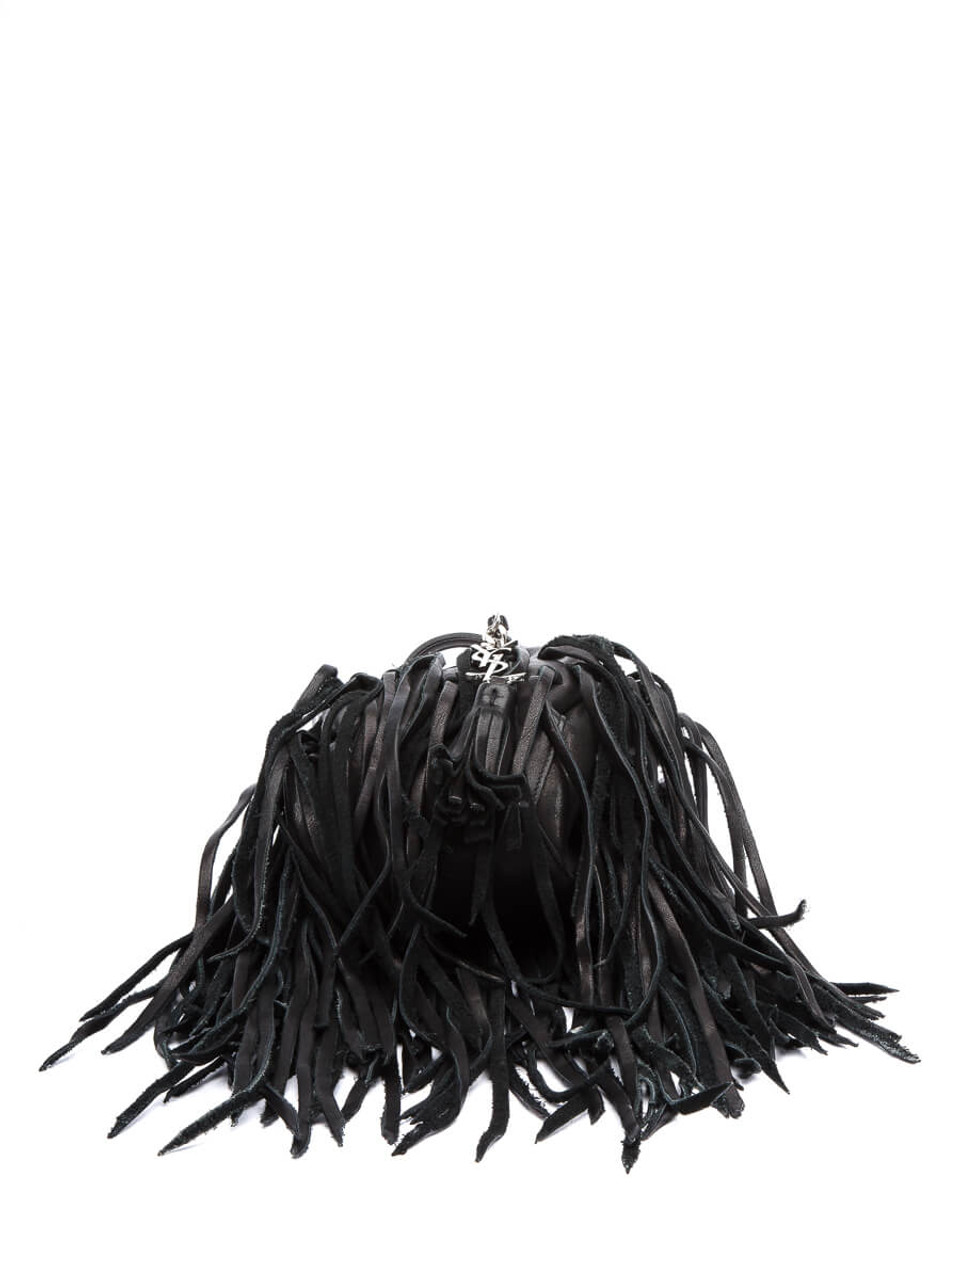 Yves Saint Laurent Women's Monogramme Bourse Mini Fringed Bucket Bag Black Leather